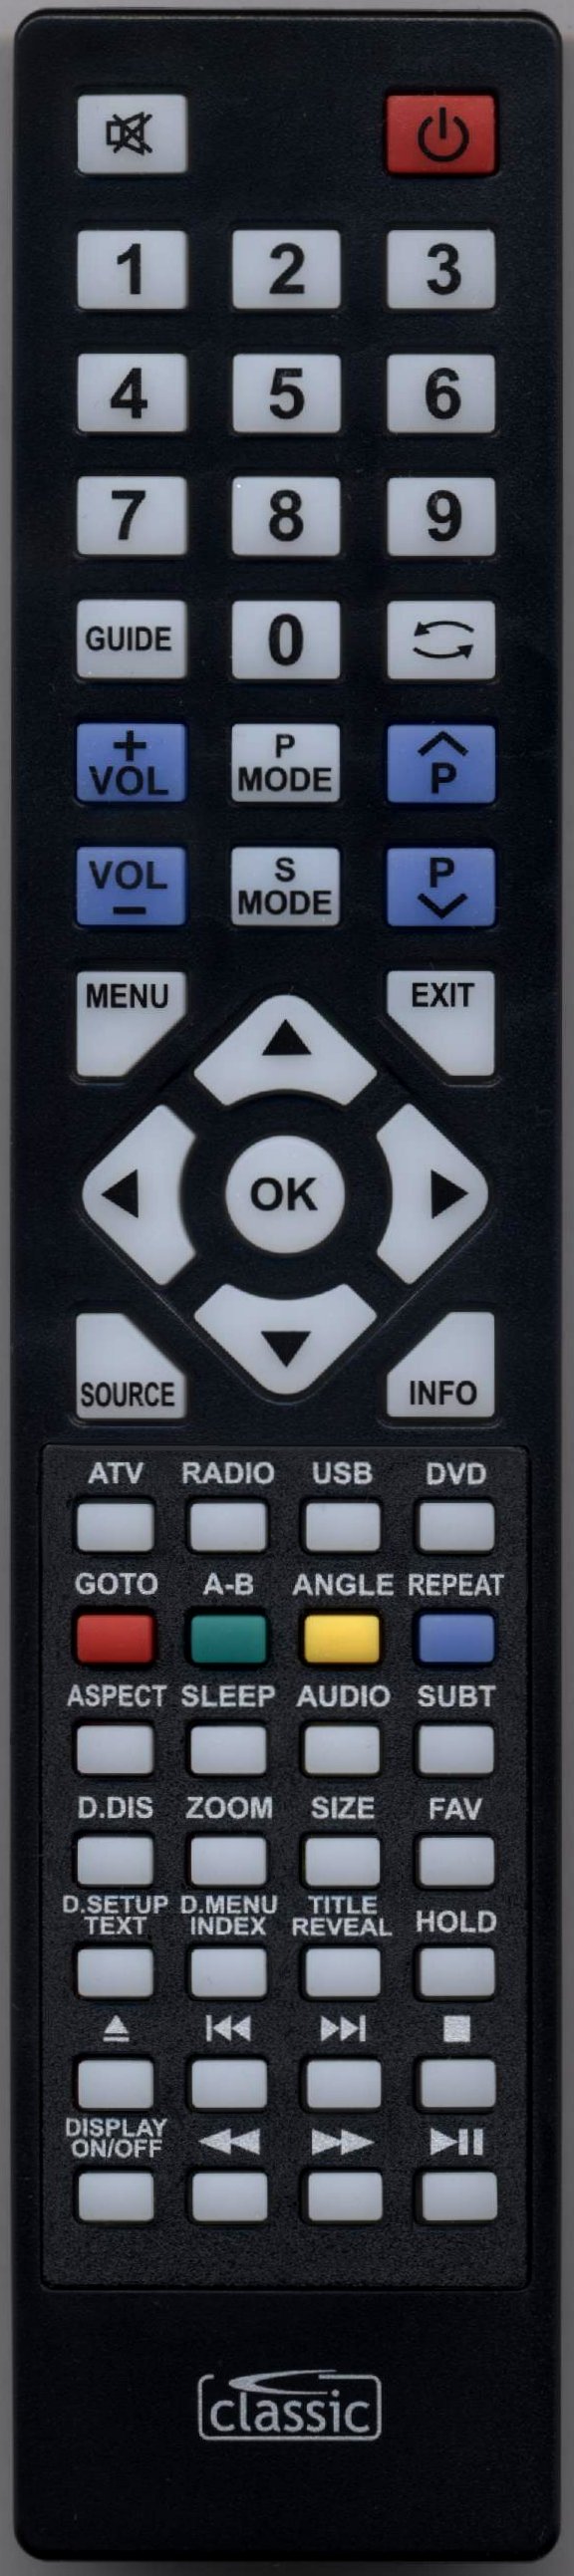 UMC X185/54G-GB-TCDU-UK Remote Control Alternative